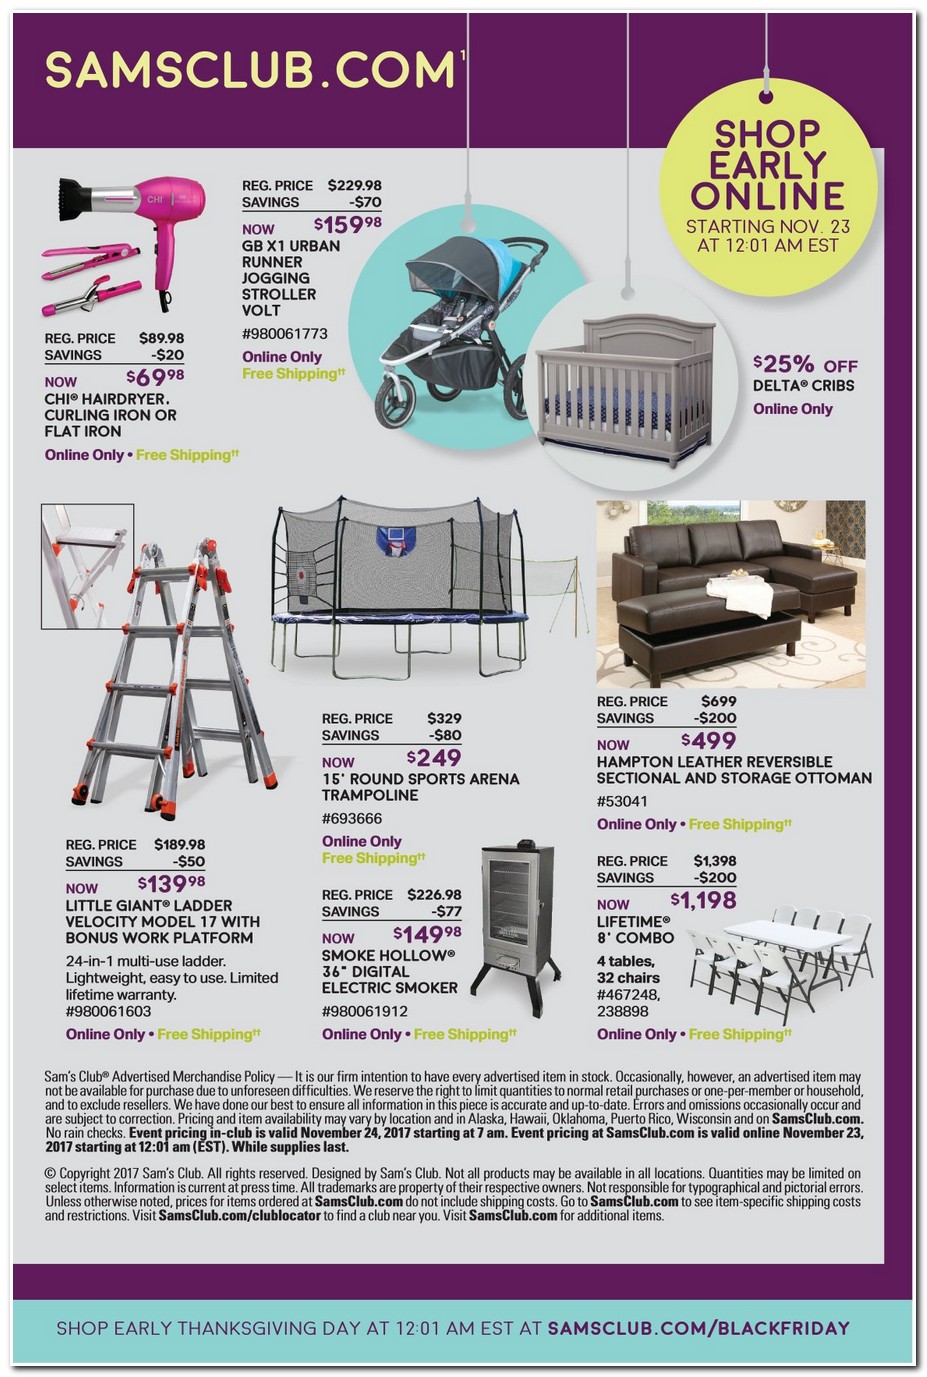 Furniture / Ladder / Baby